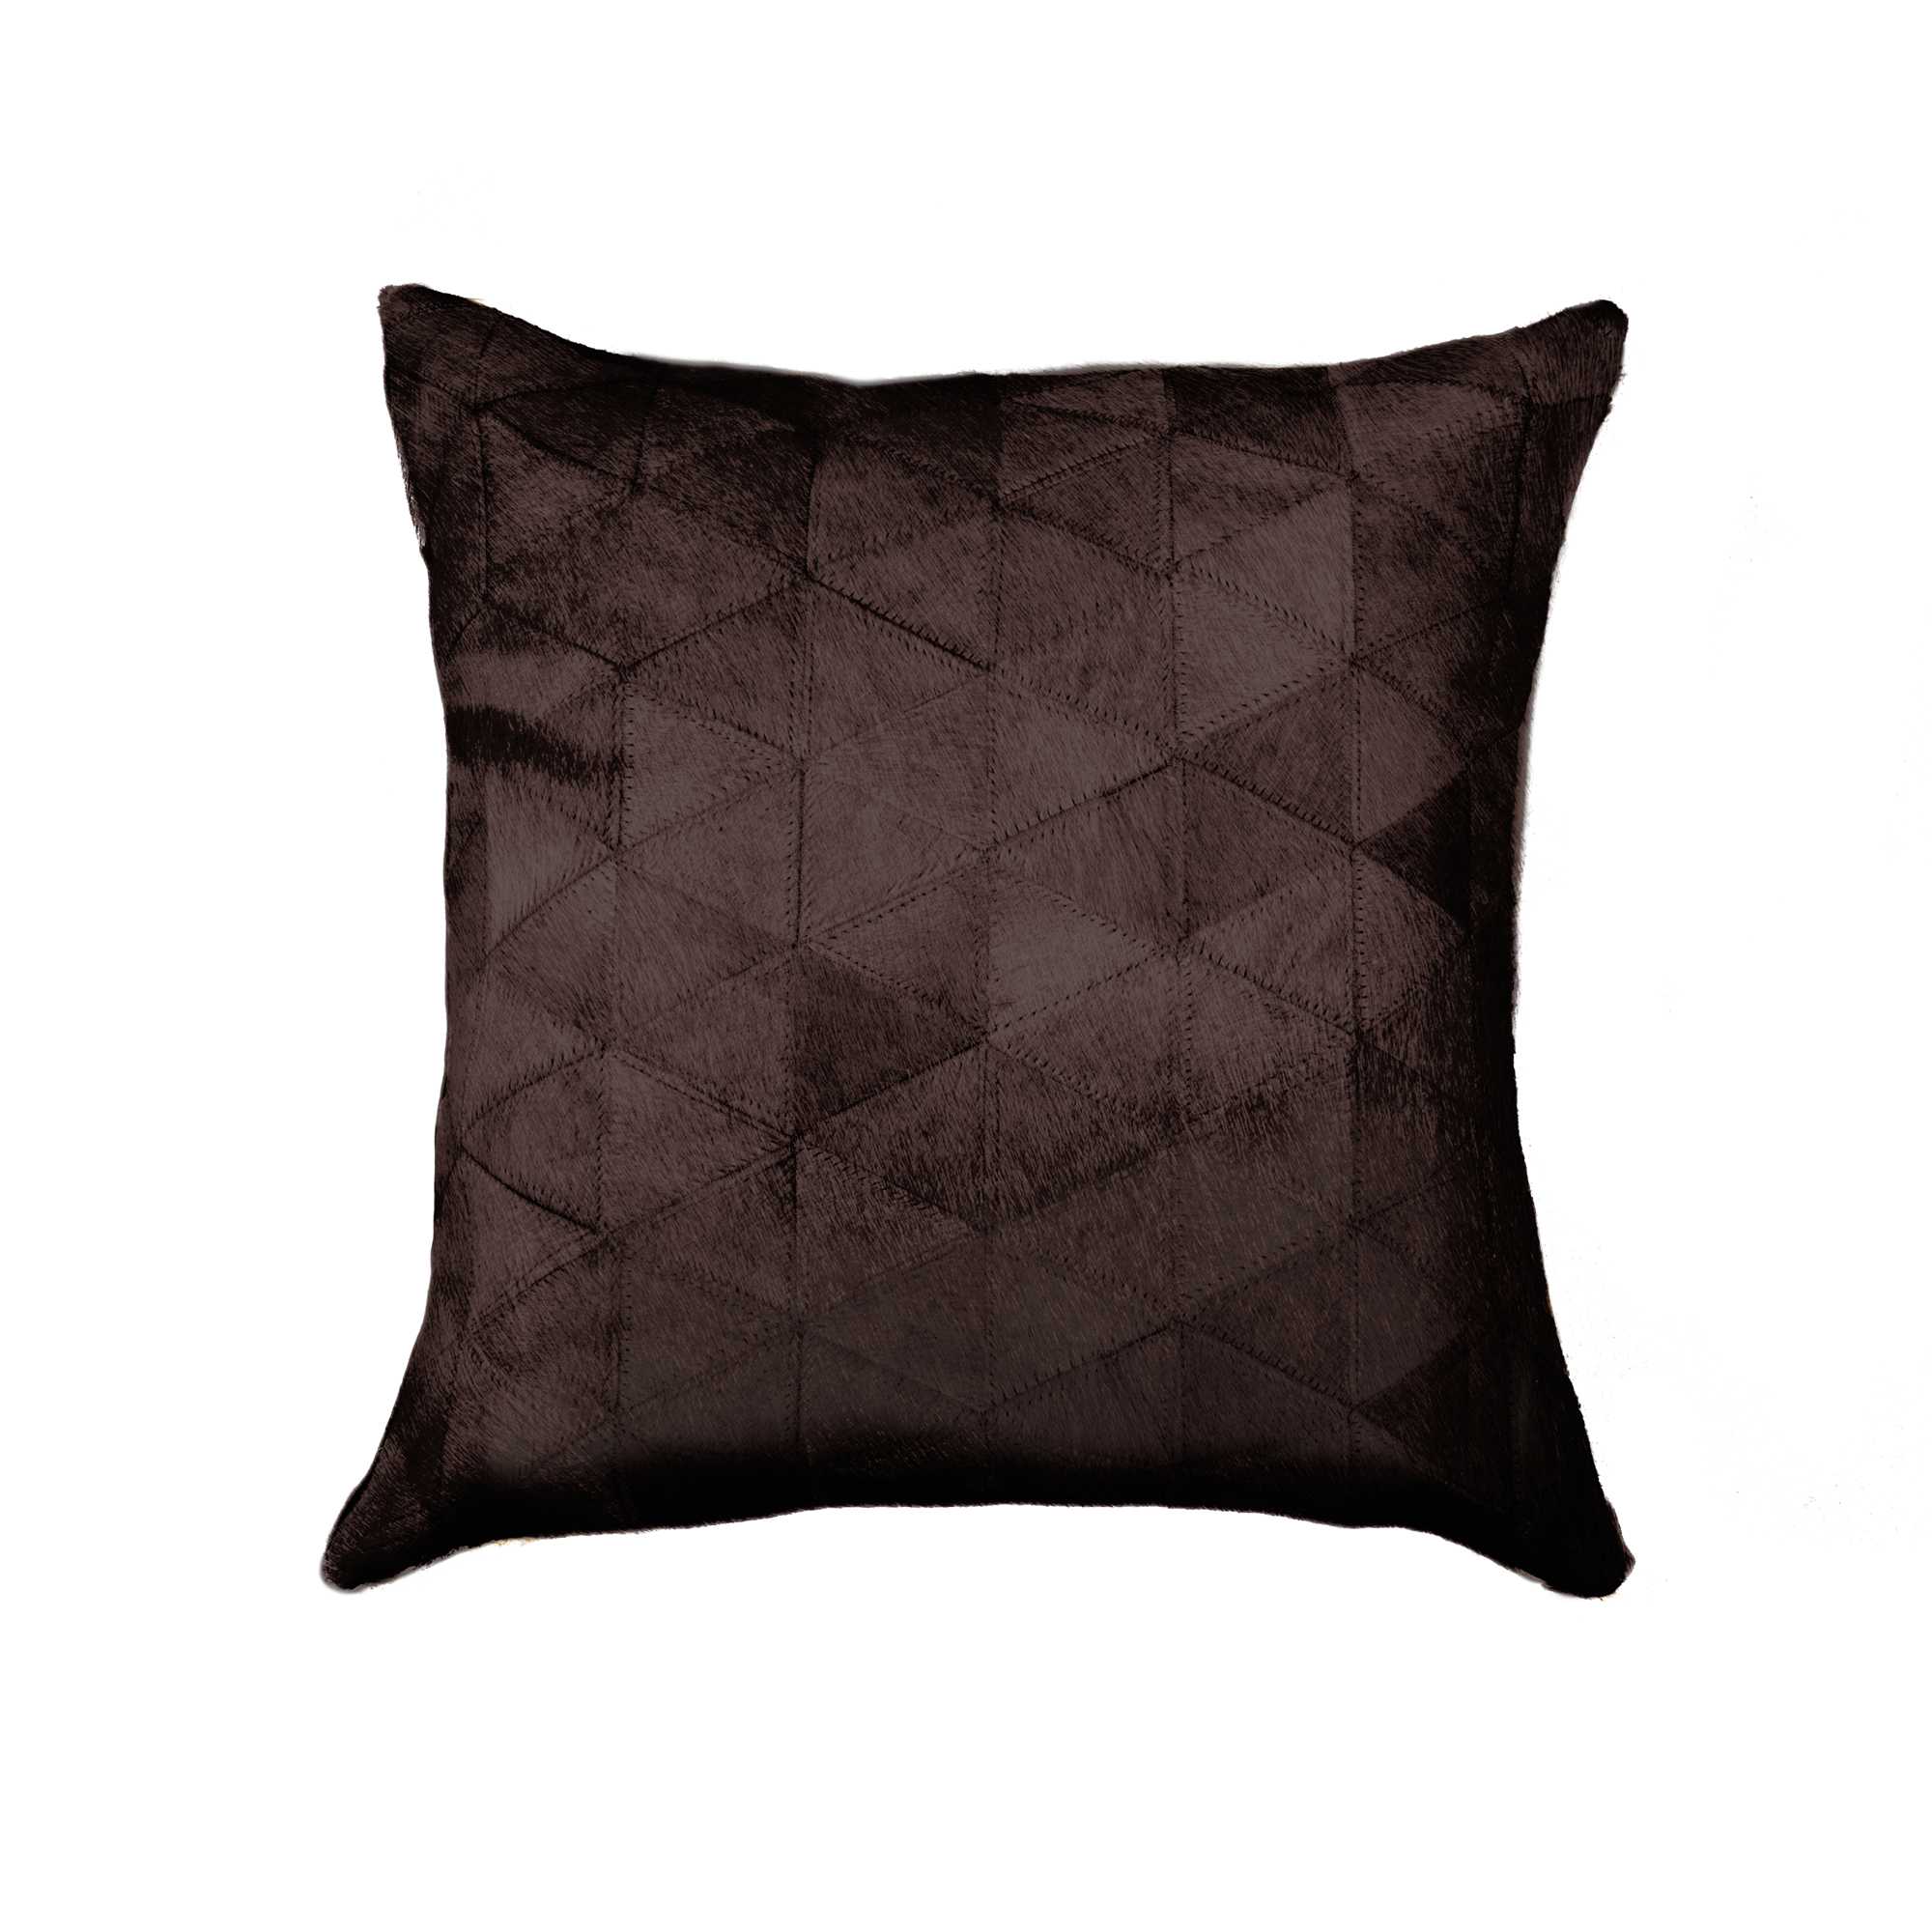 18" x 18" x 5" Contemporary Chocolate Mosaic Kobe Cowhide - Pillow